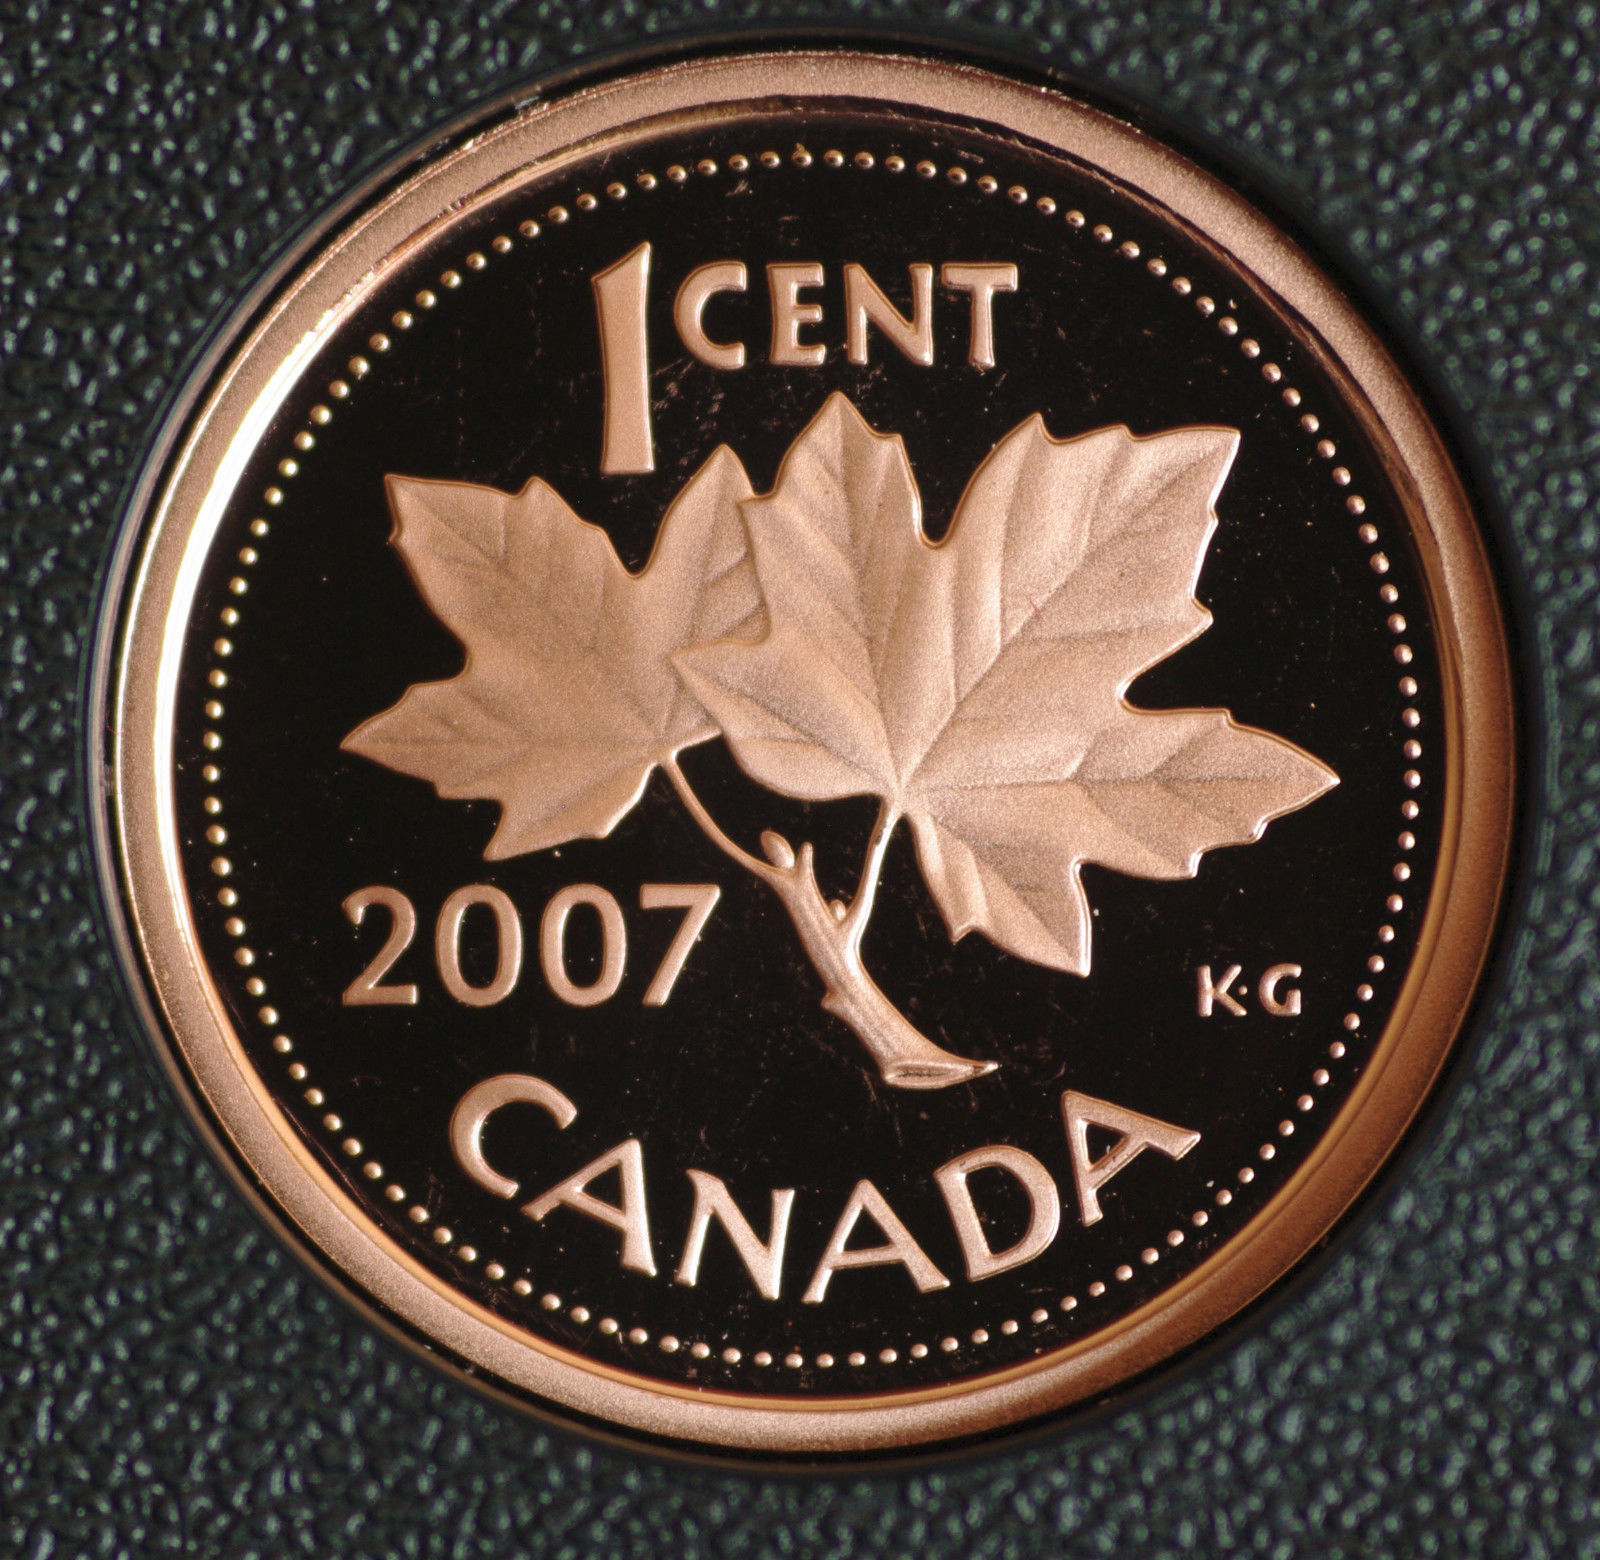 2007 Canada Classic design 1 cent coin in pure copper-  in proof finish